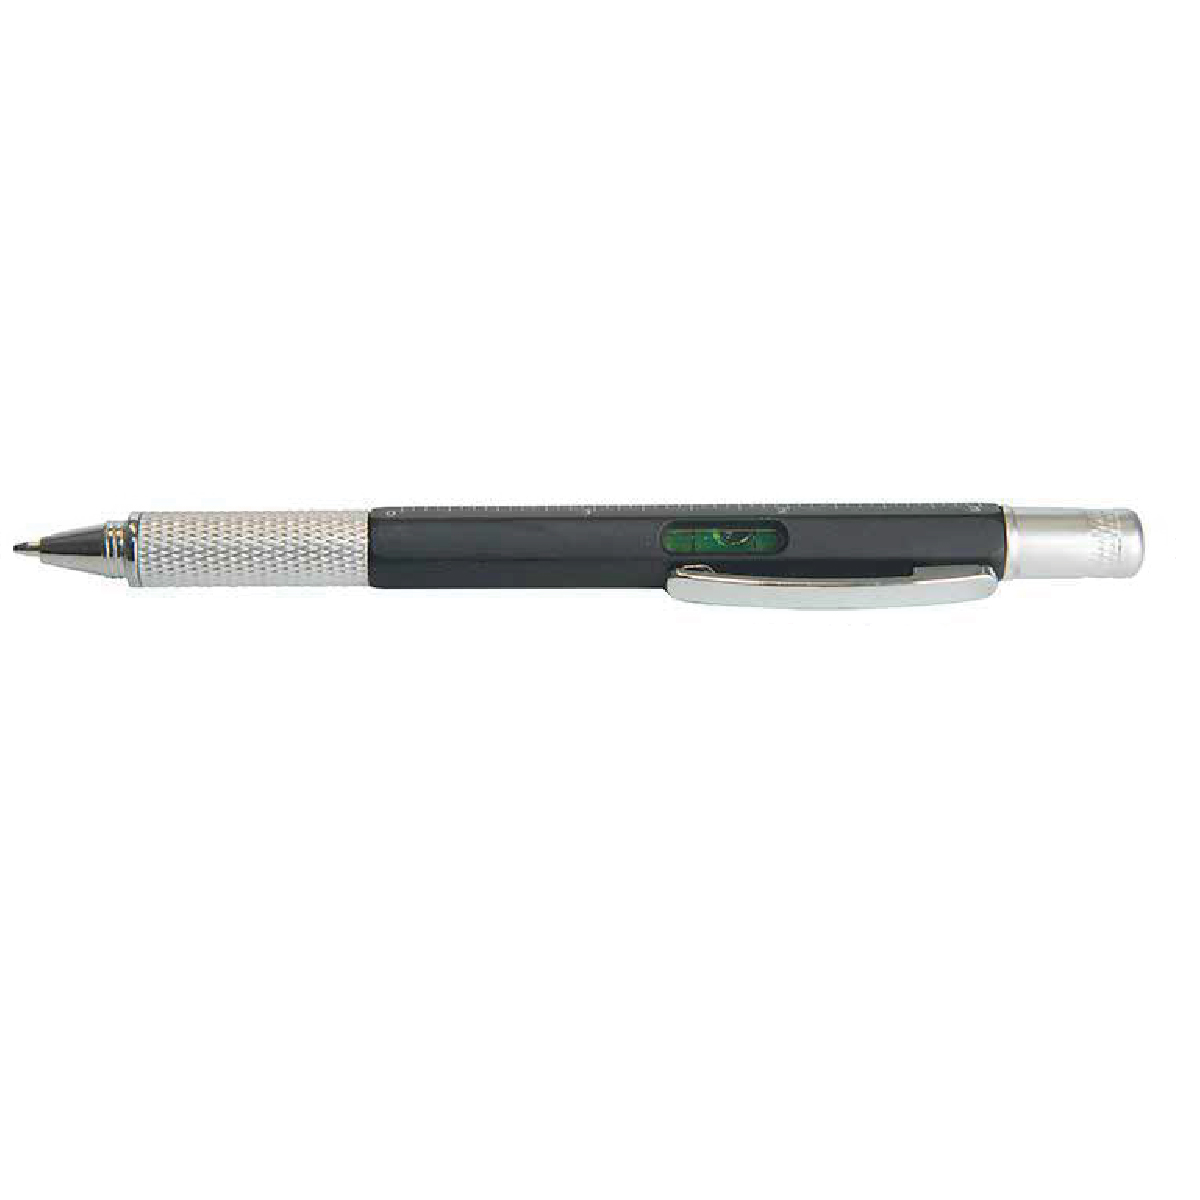 Black Multi Tool Pen with Level